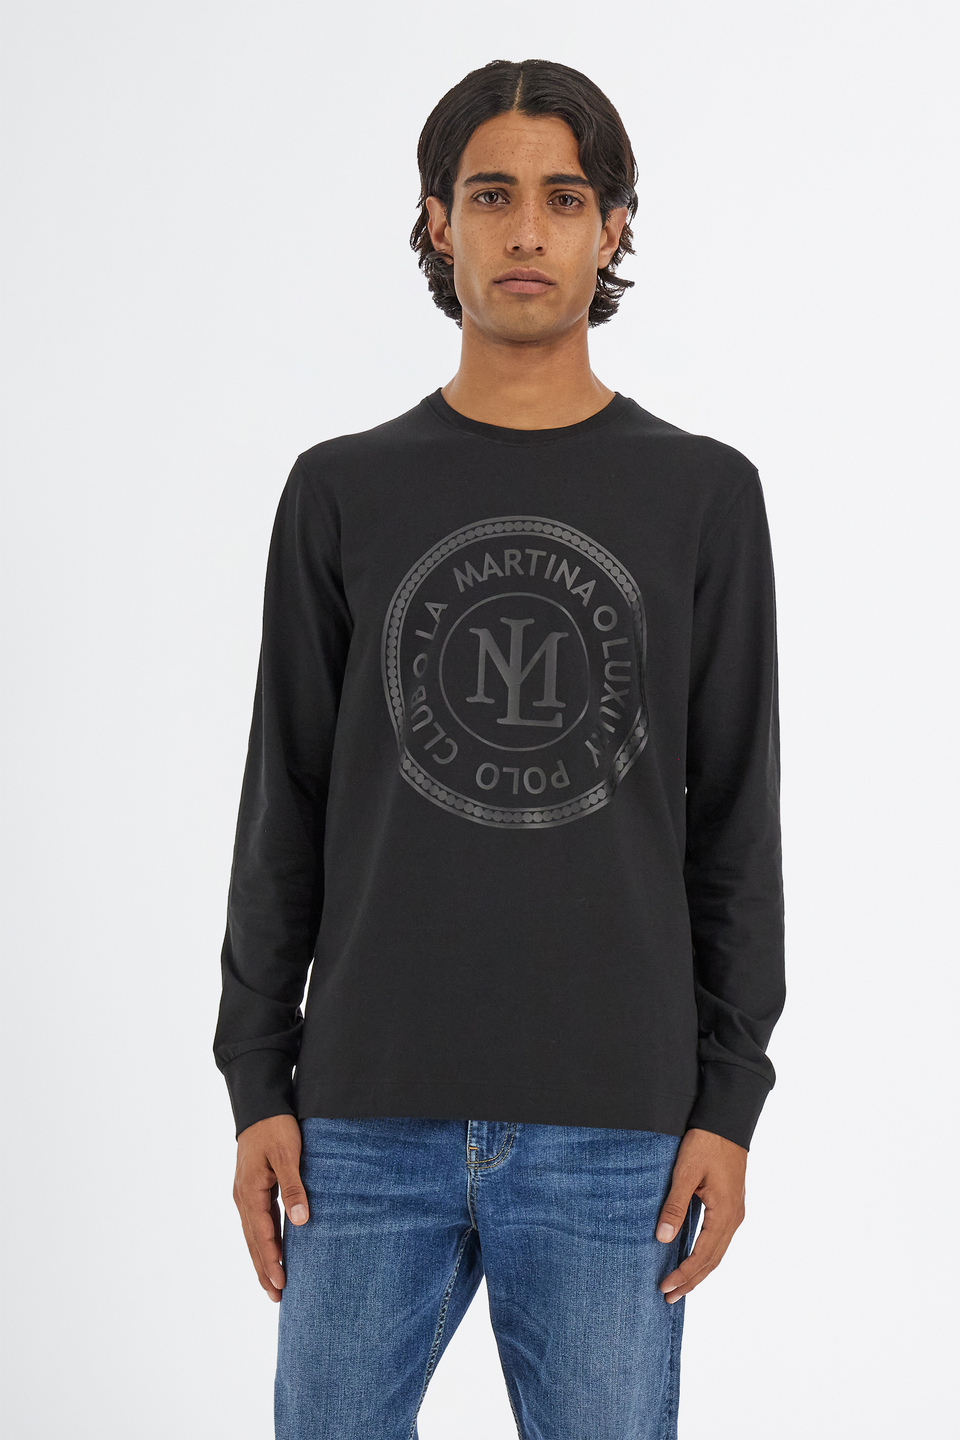 Camiseta de manga larga corte regular de cuello redondo para hombre | La Martina - Official Online Shop